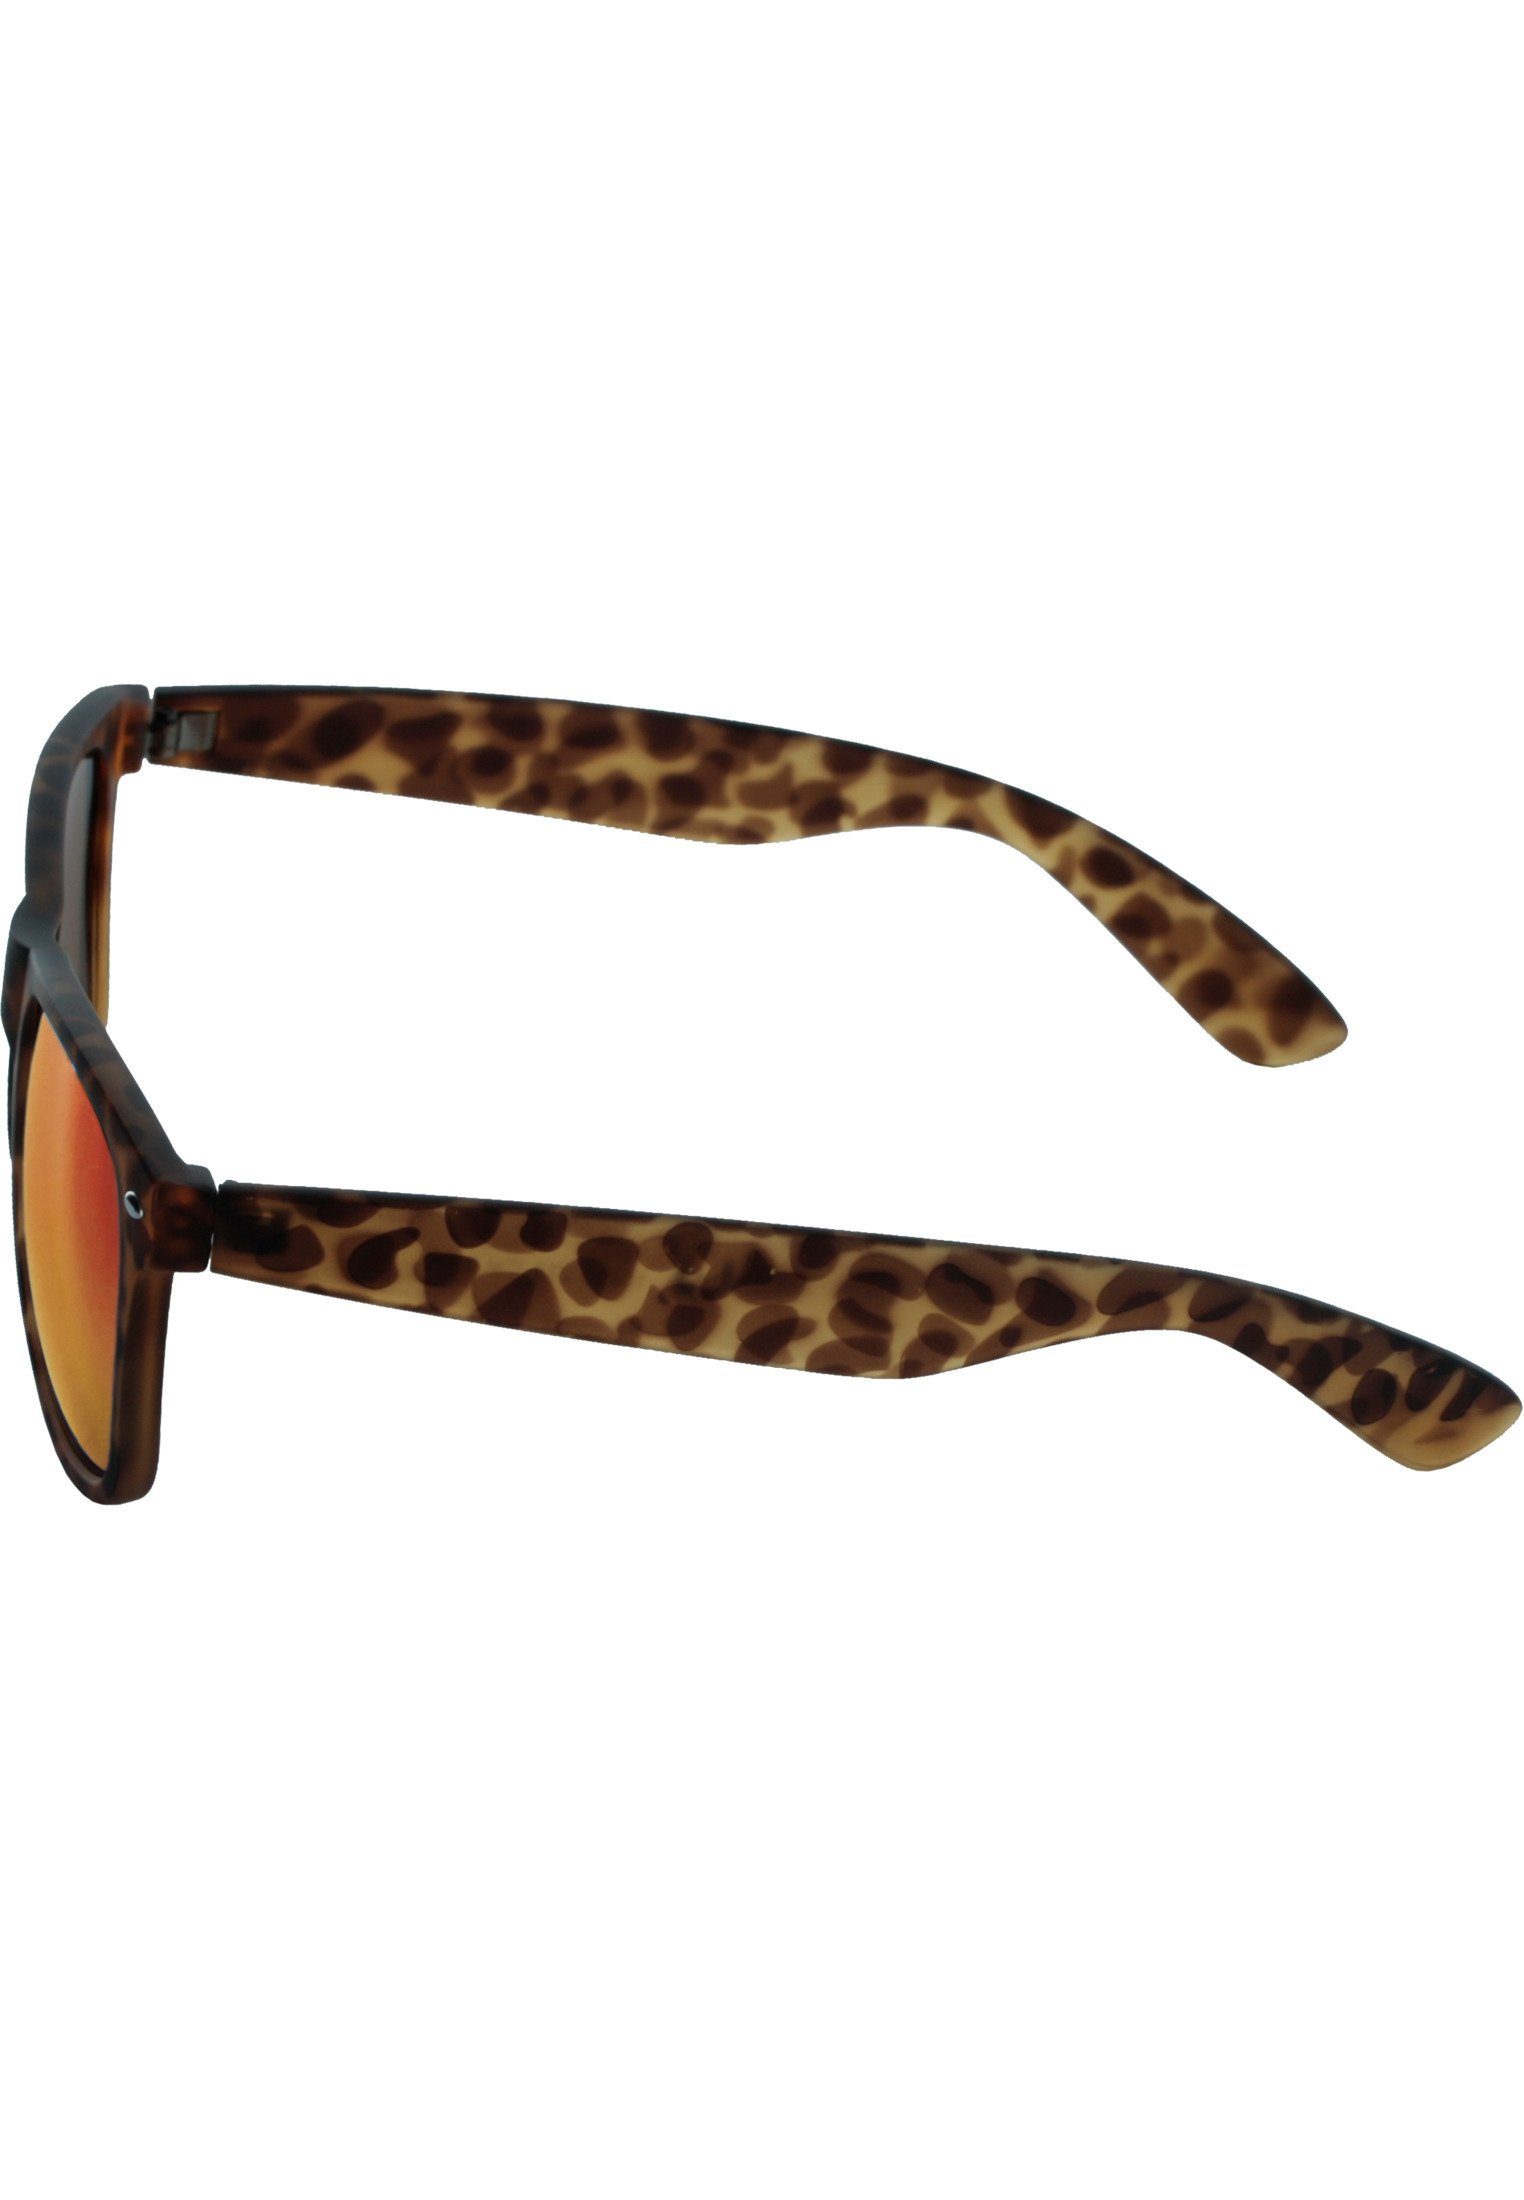 MSTRDS Sonnenbrille Mirror Accessoires amber/orange Likoma Sunglasses